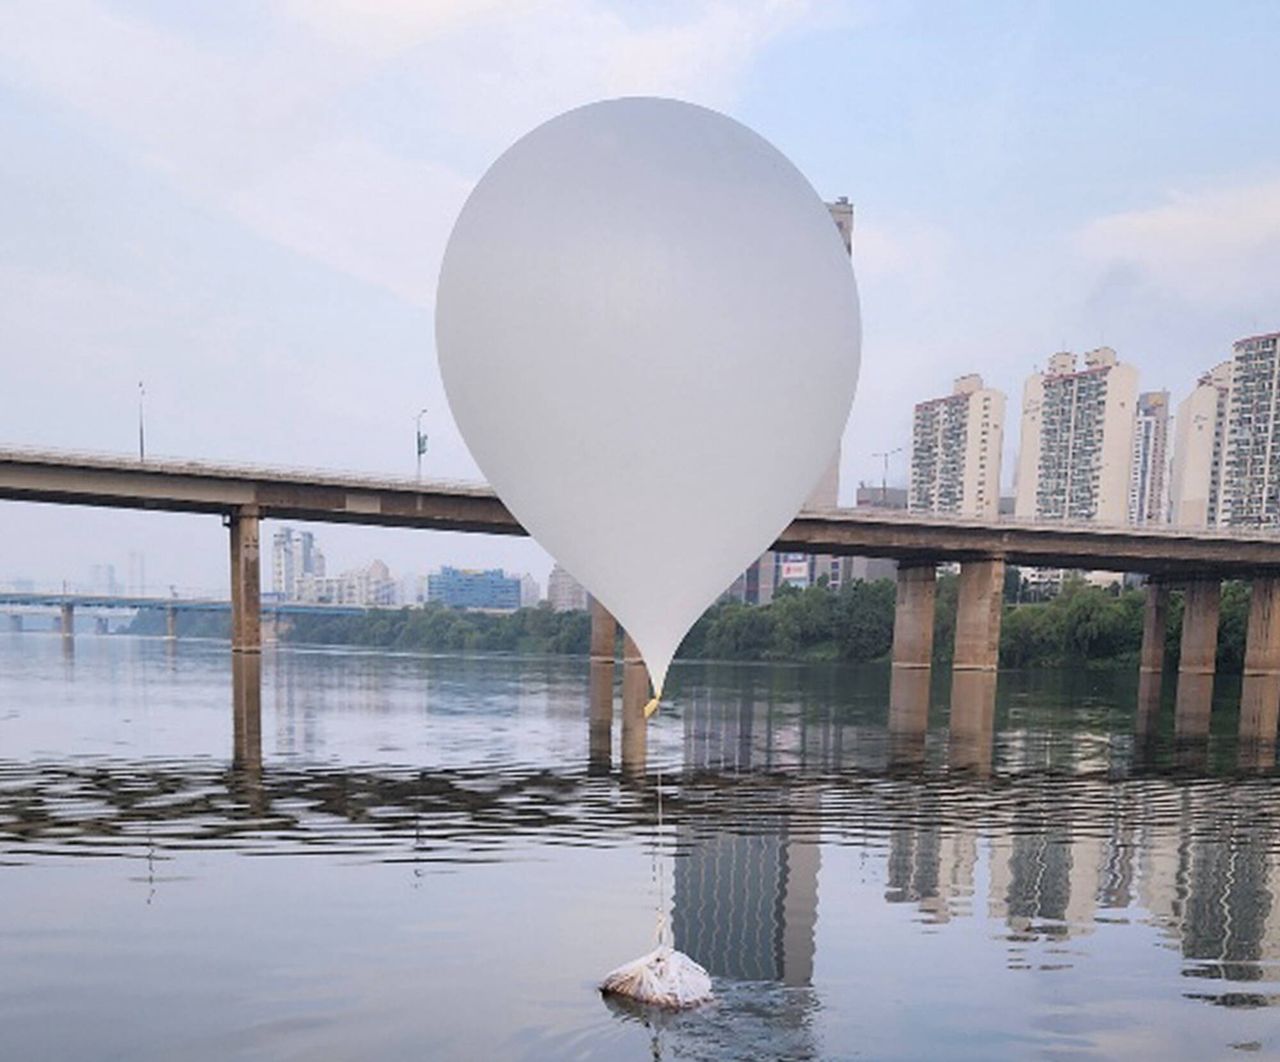 North Korea has again sent balloons with rubbish to South Korea.